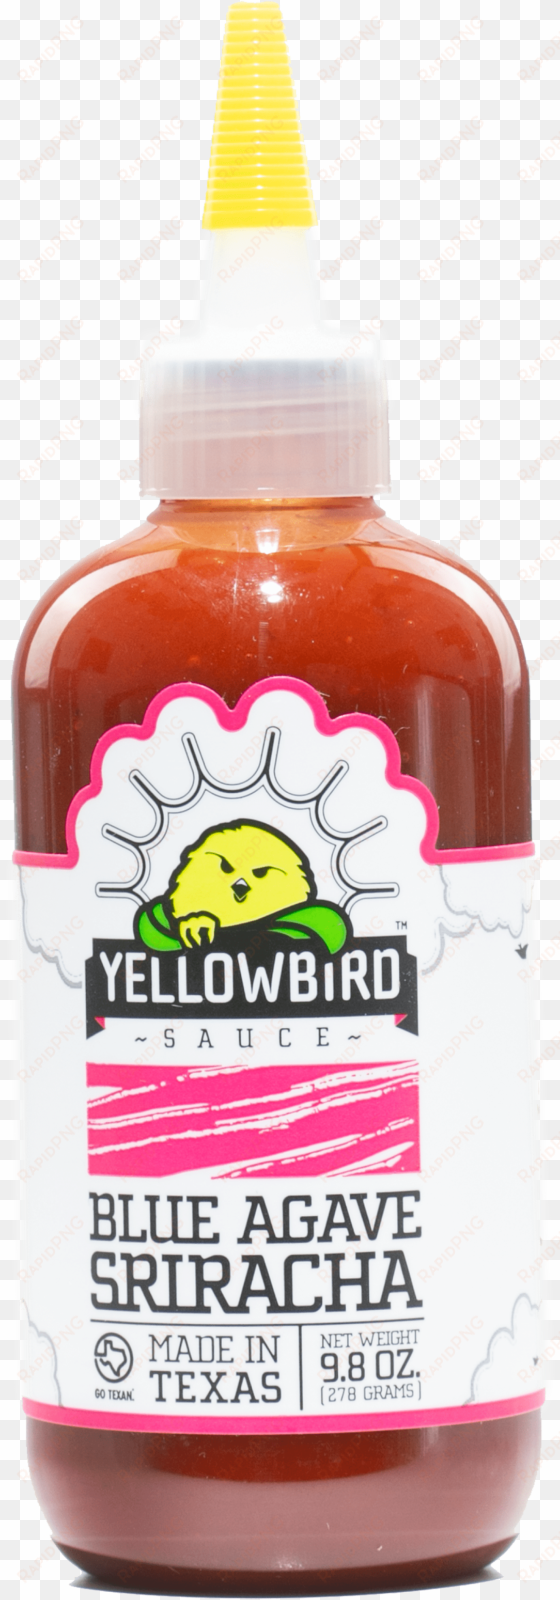 yellowbird blue agave sriracha - yellowbird sauce sauce, habanero - 9.8 oz bottle